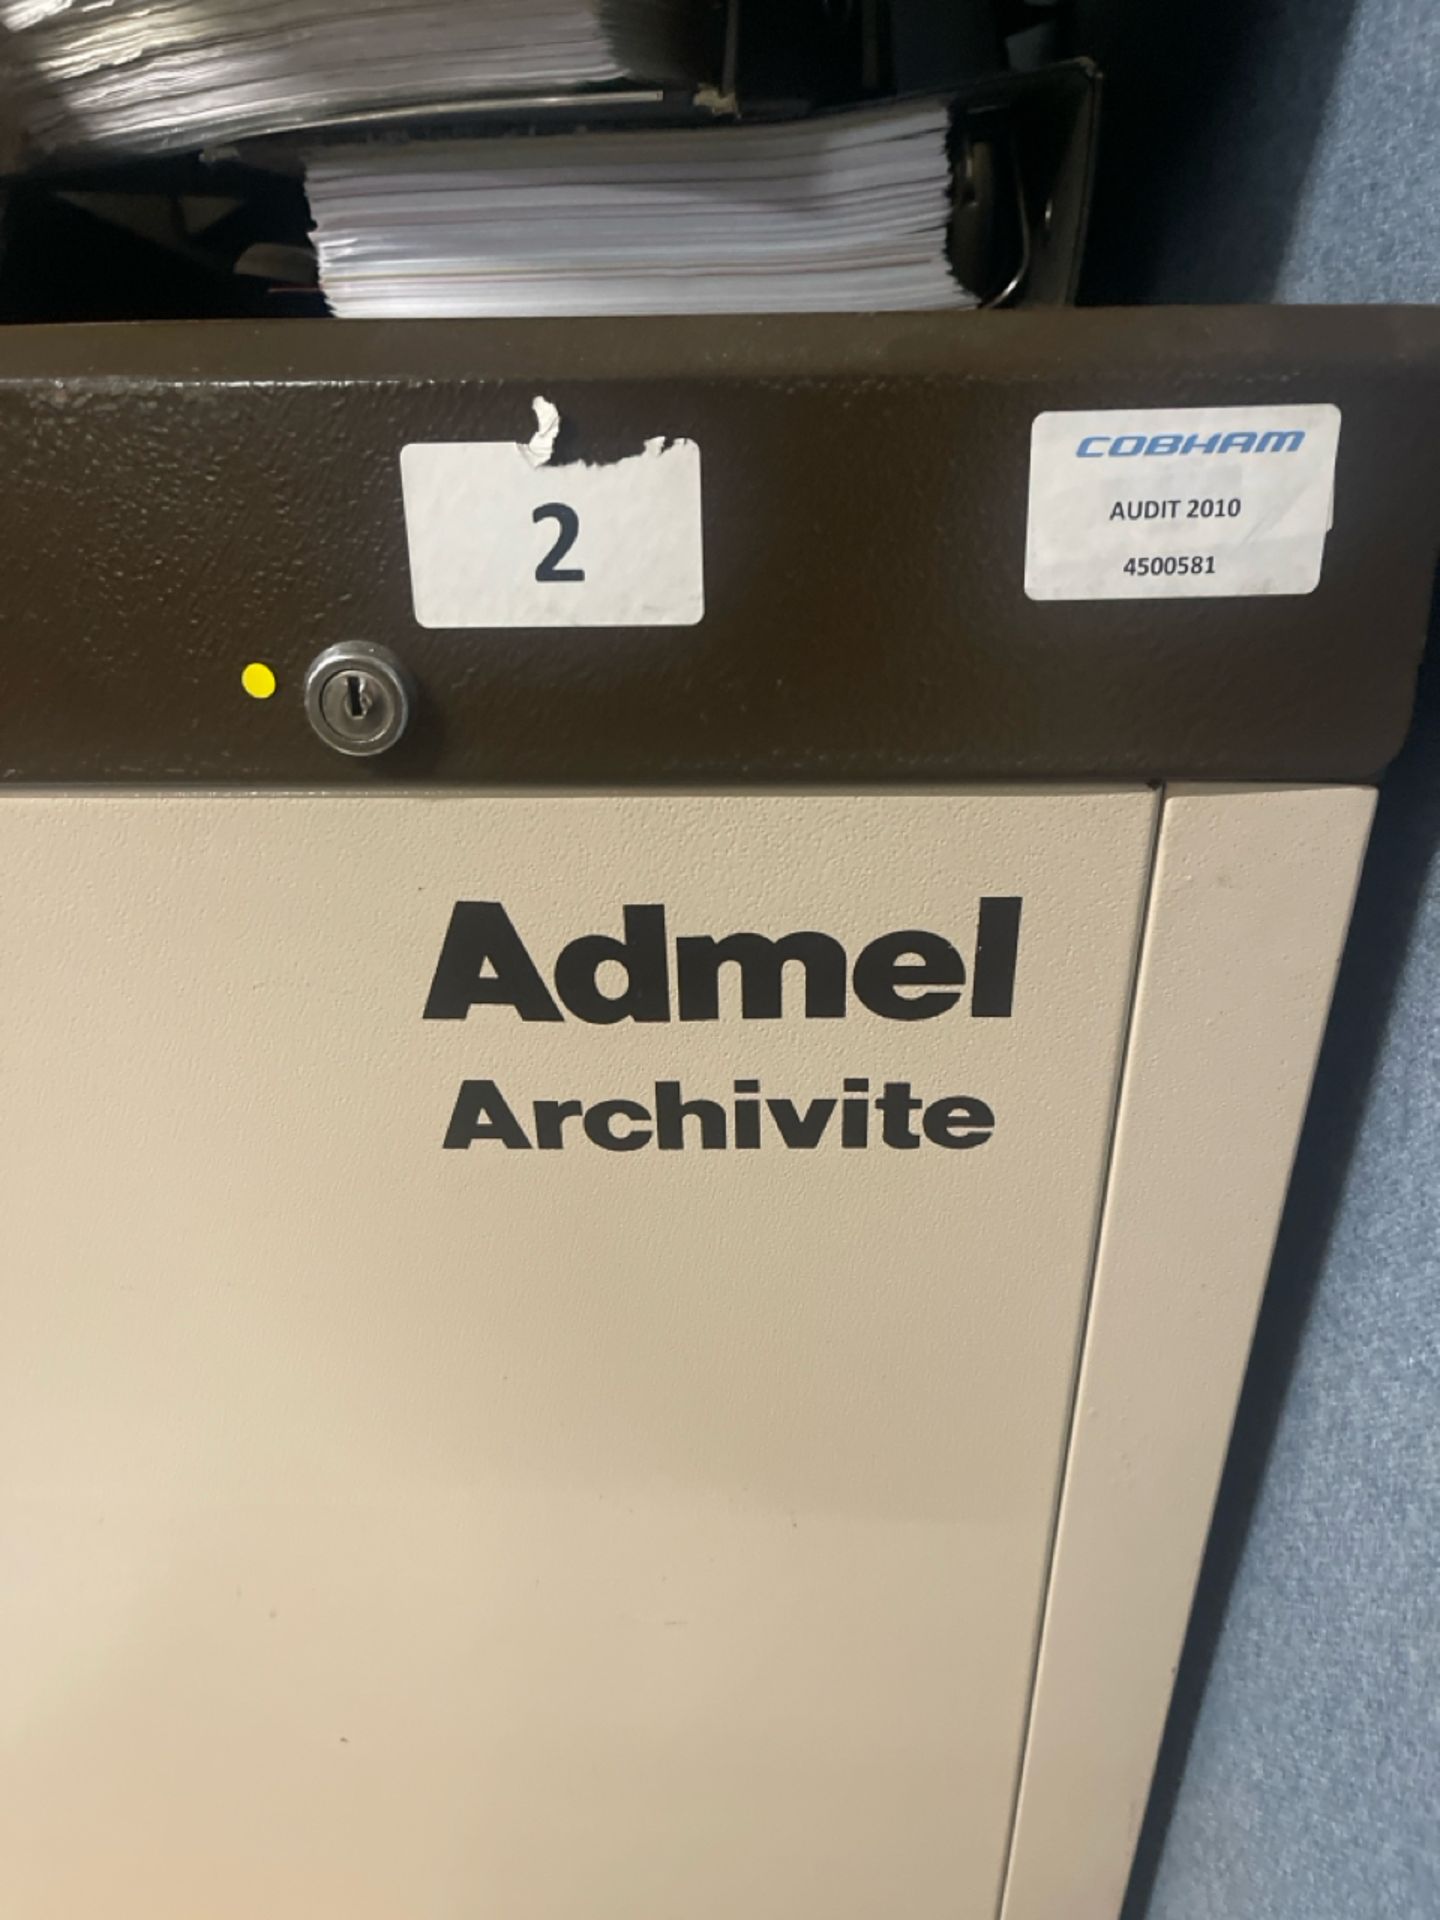 Admel Archivite - Image 2 of 3